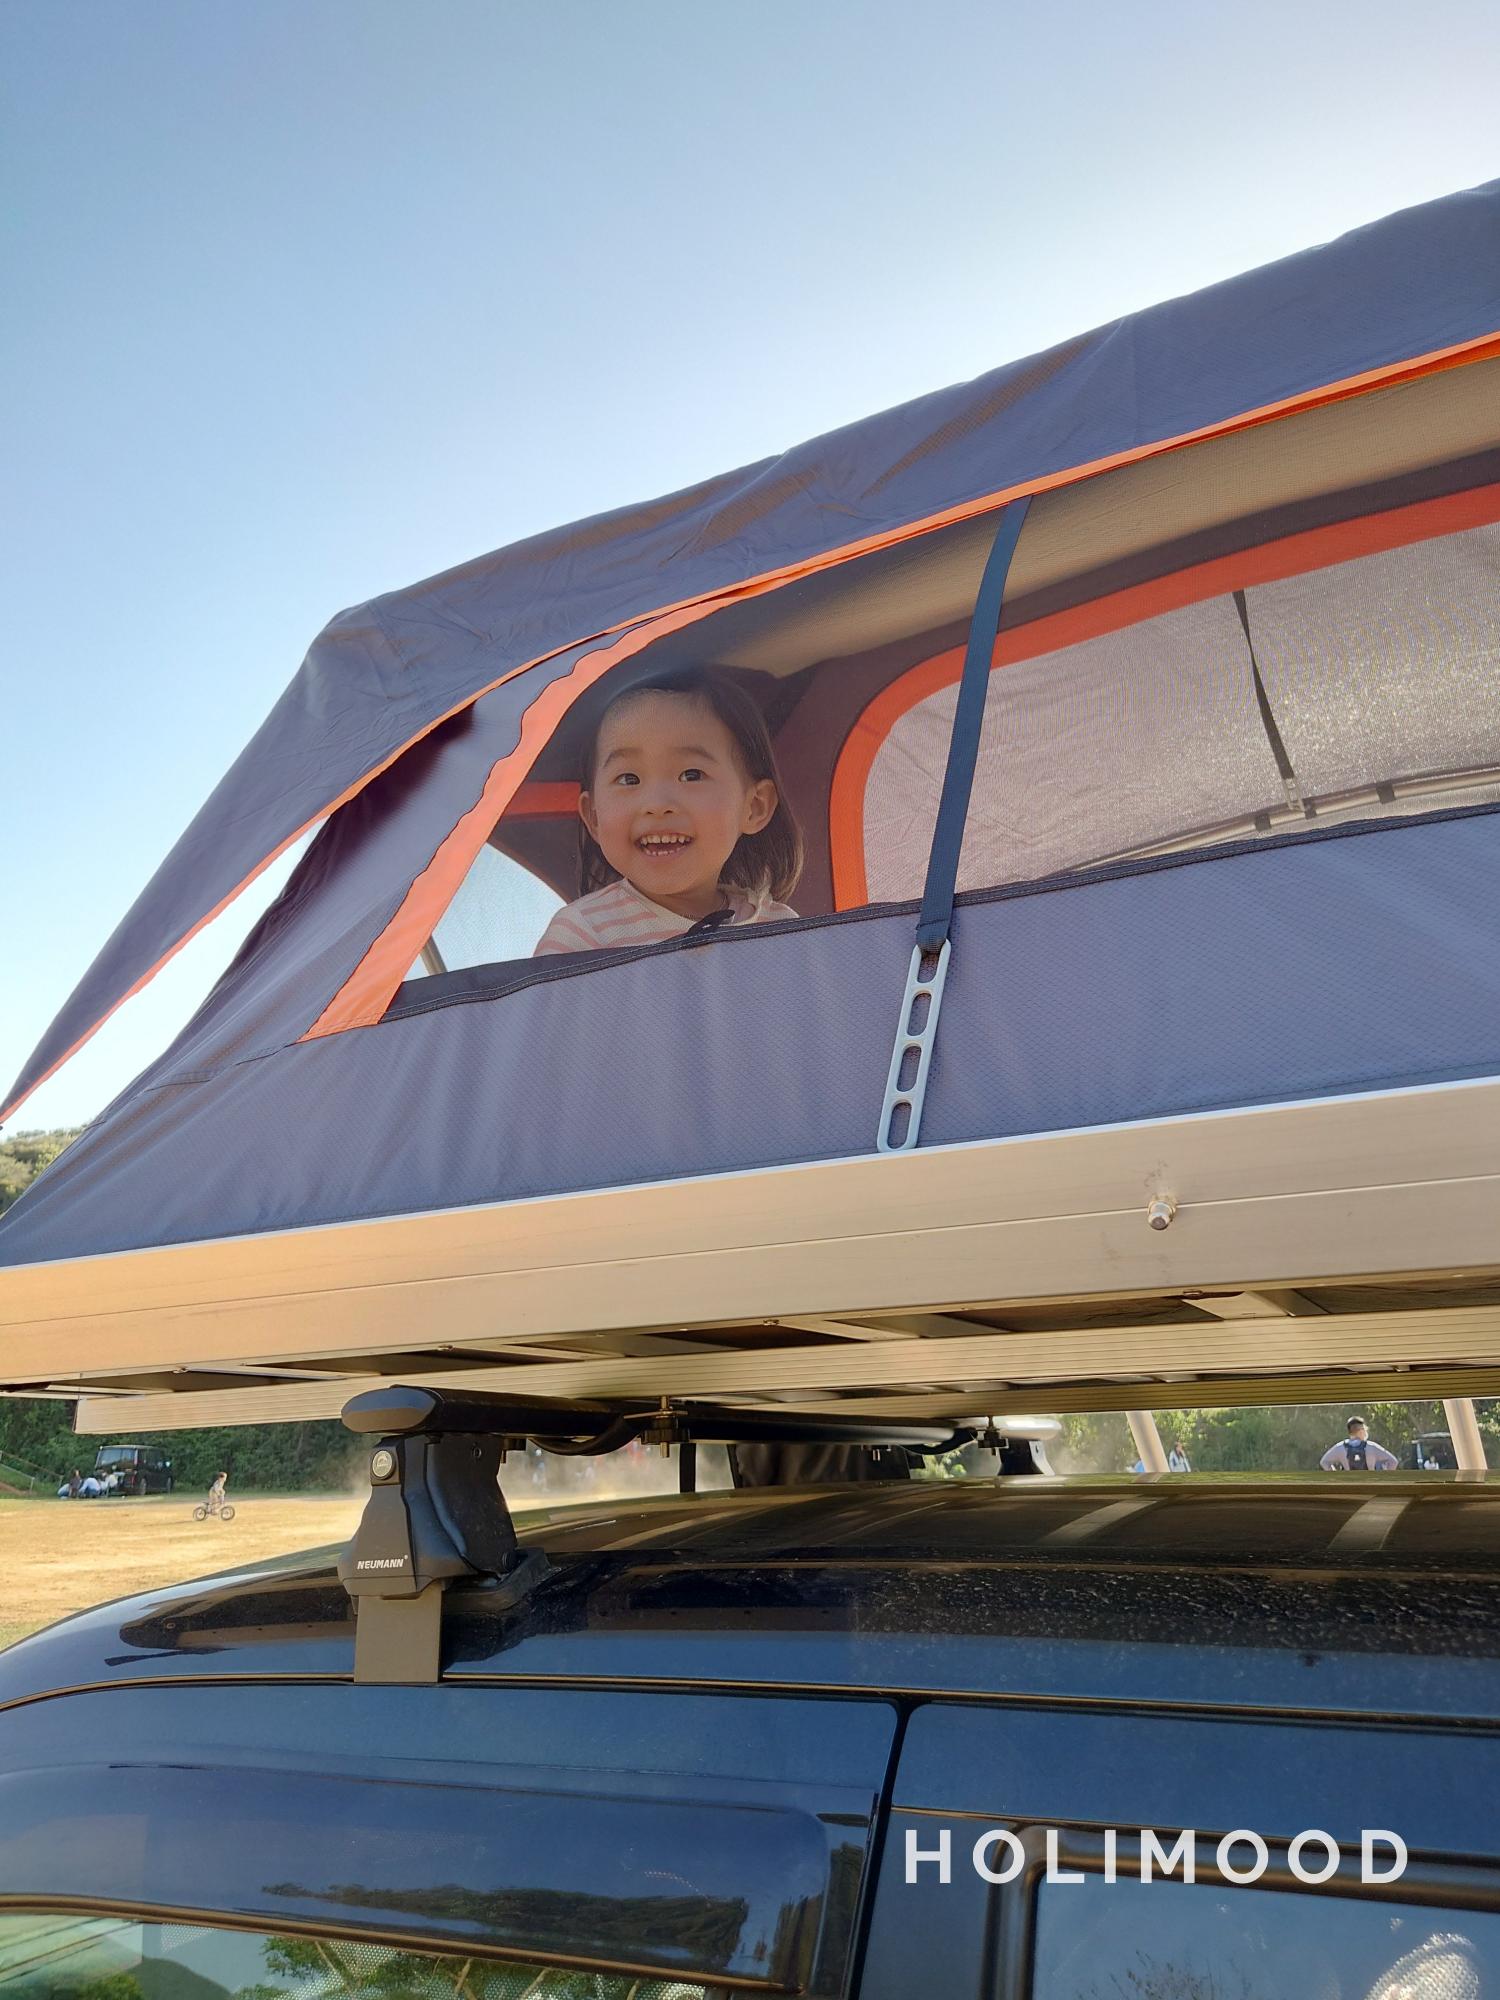 Top Tent Car Camping 【汽車露營】Toyota BB 車頂營體驗 (可攜帶寵物/租借營具) 7